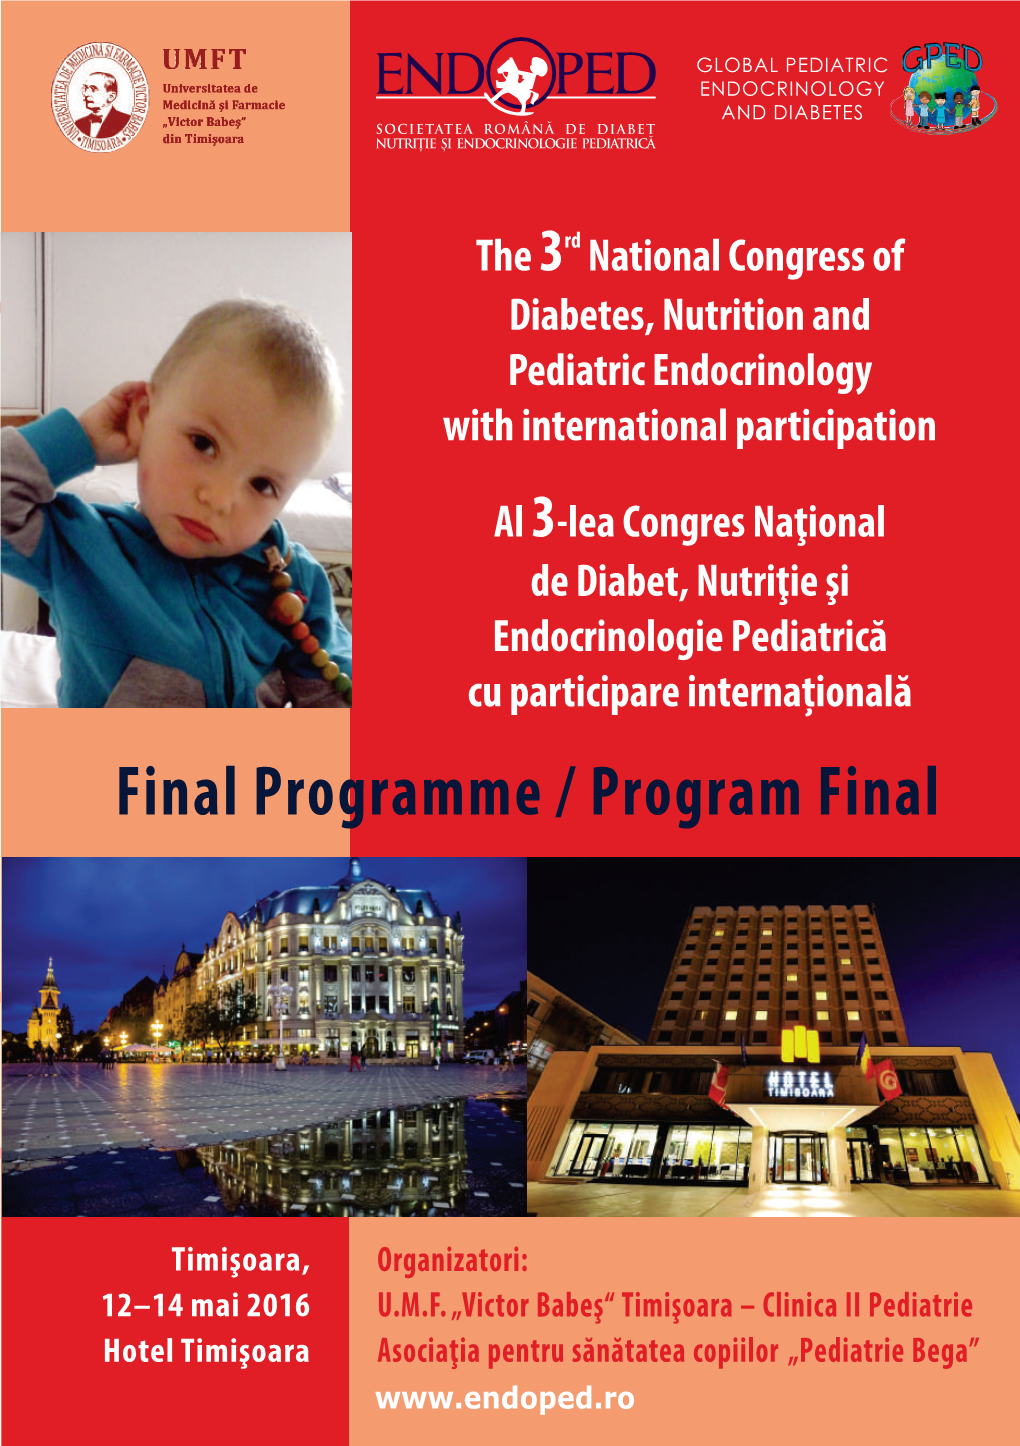 Final Programme / Program Final